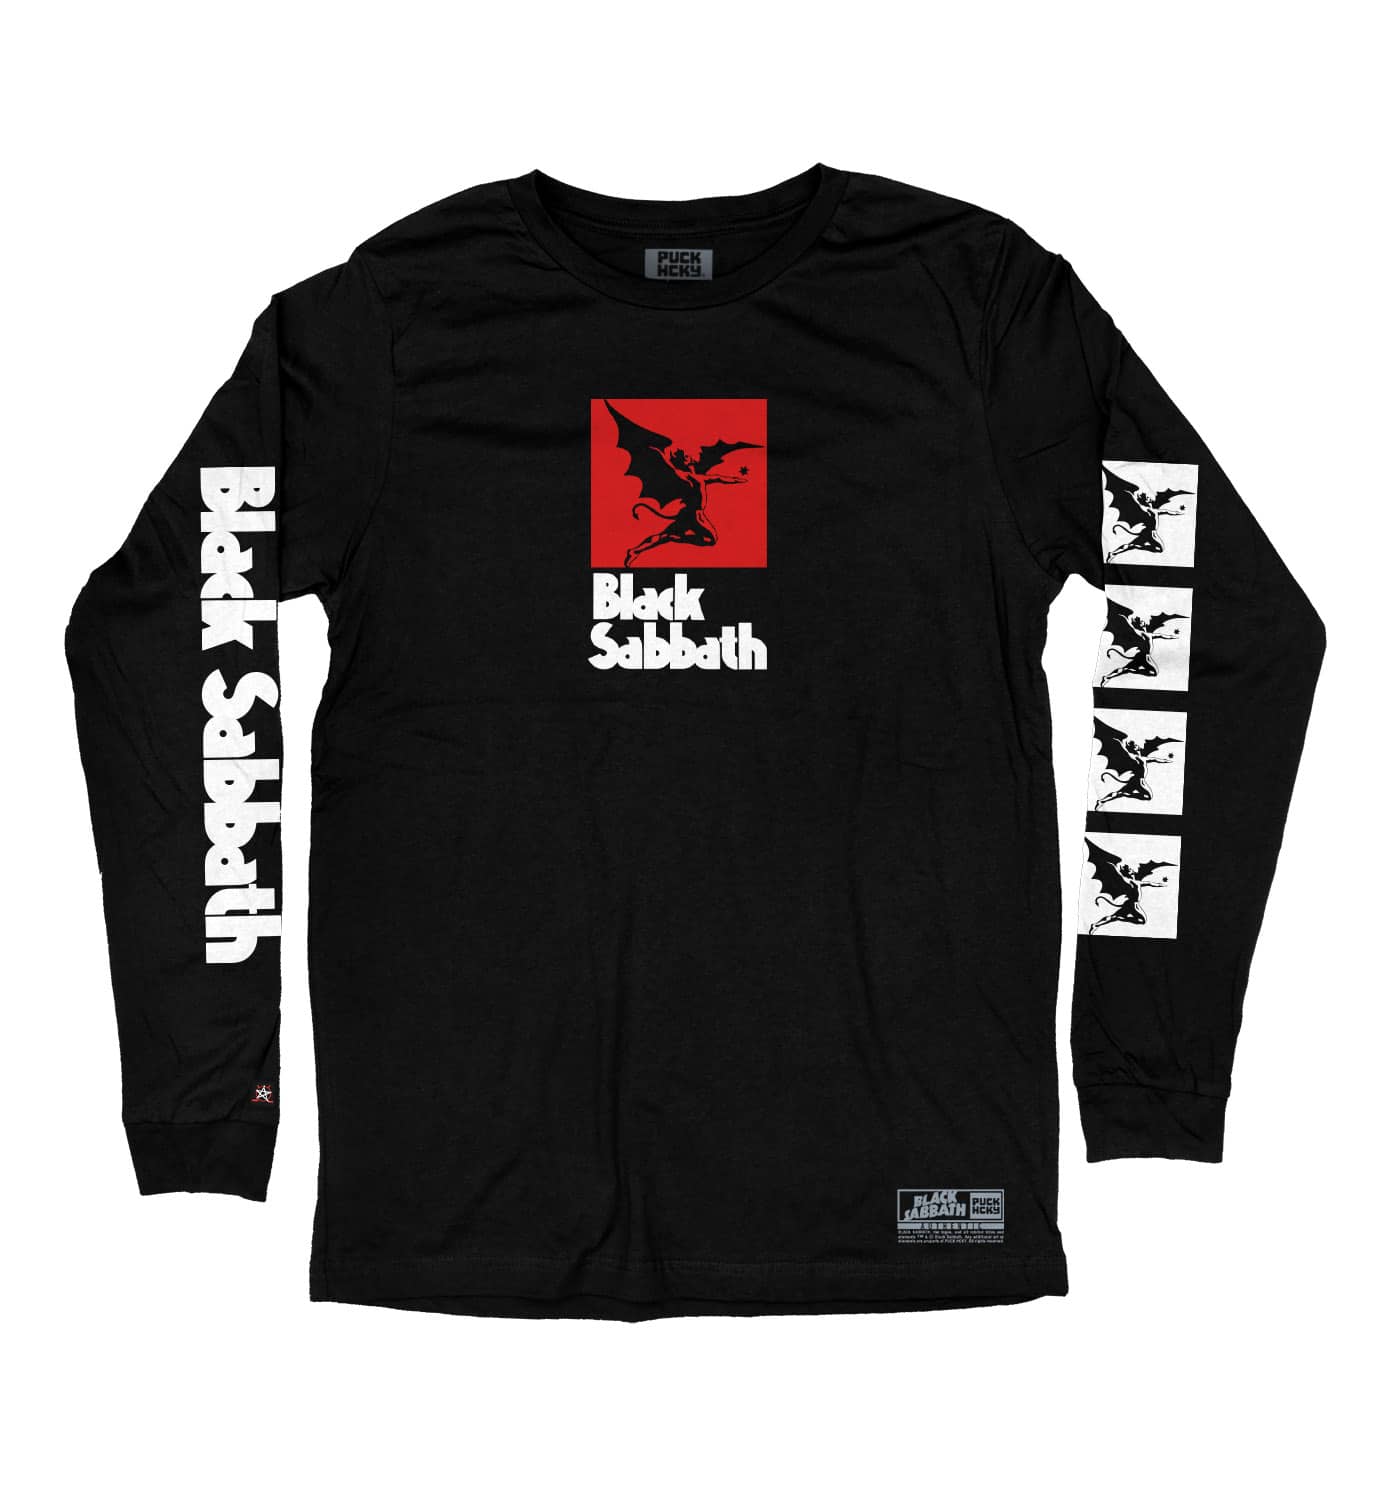 BLACK SABBATH 'IRON MAN' long sleeve hockey t-shirt in black front view